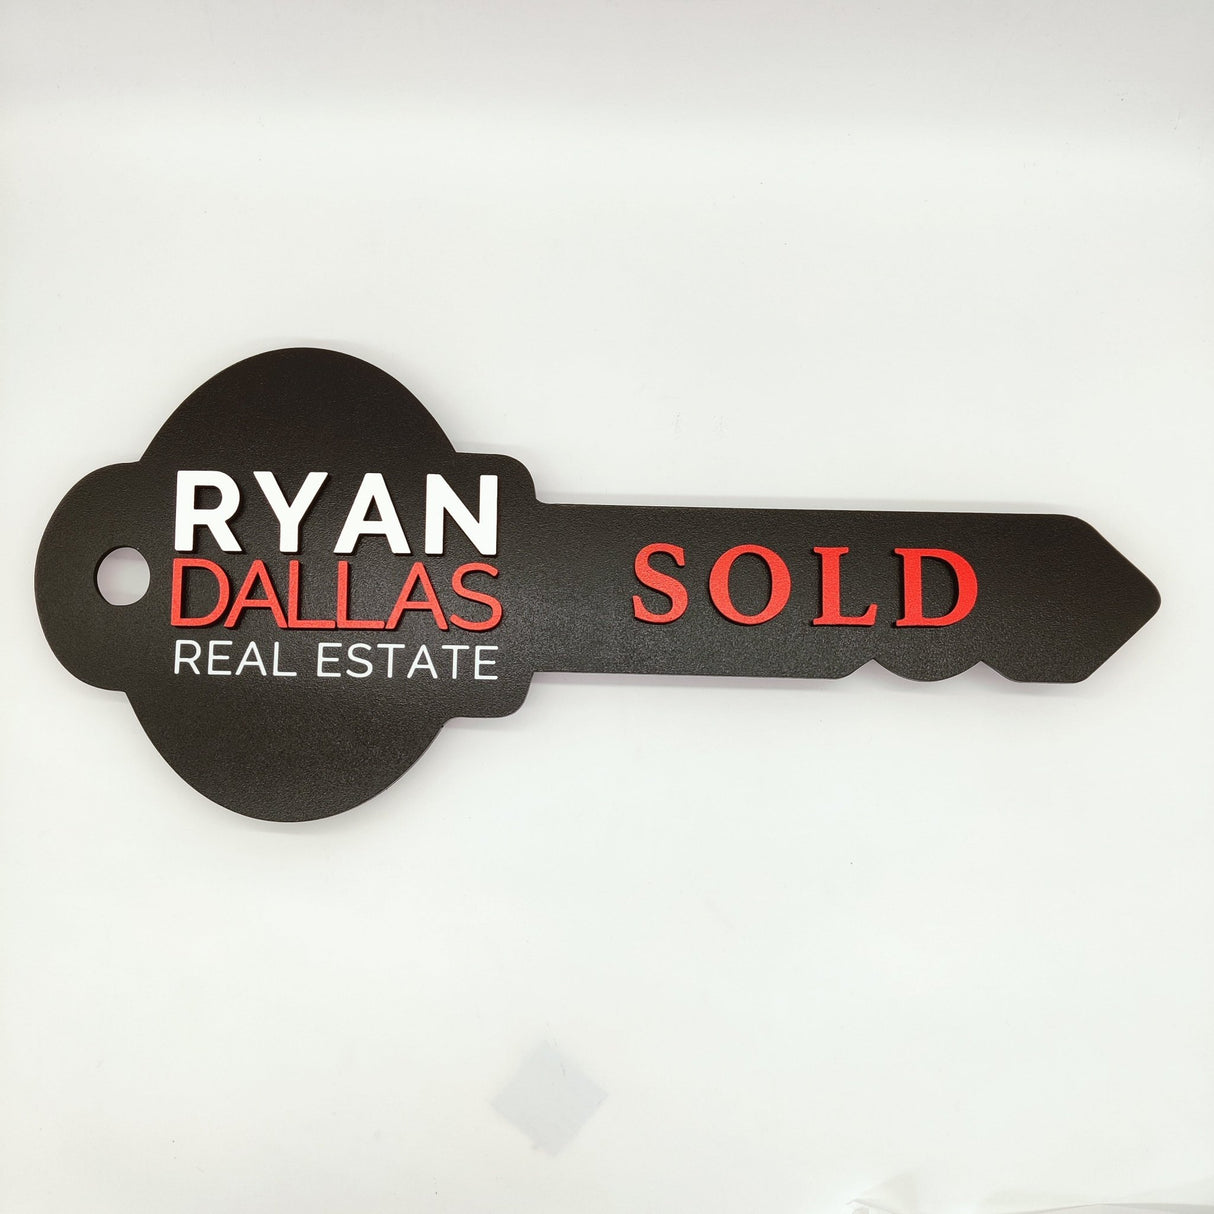 Realtor Sold Key, Sold Real Estate Agent Key, Closing Realtor Gift - Real Estate Store